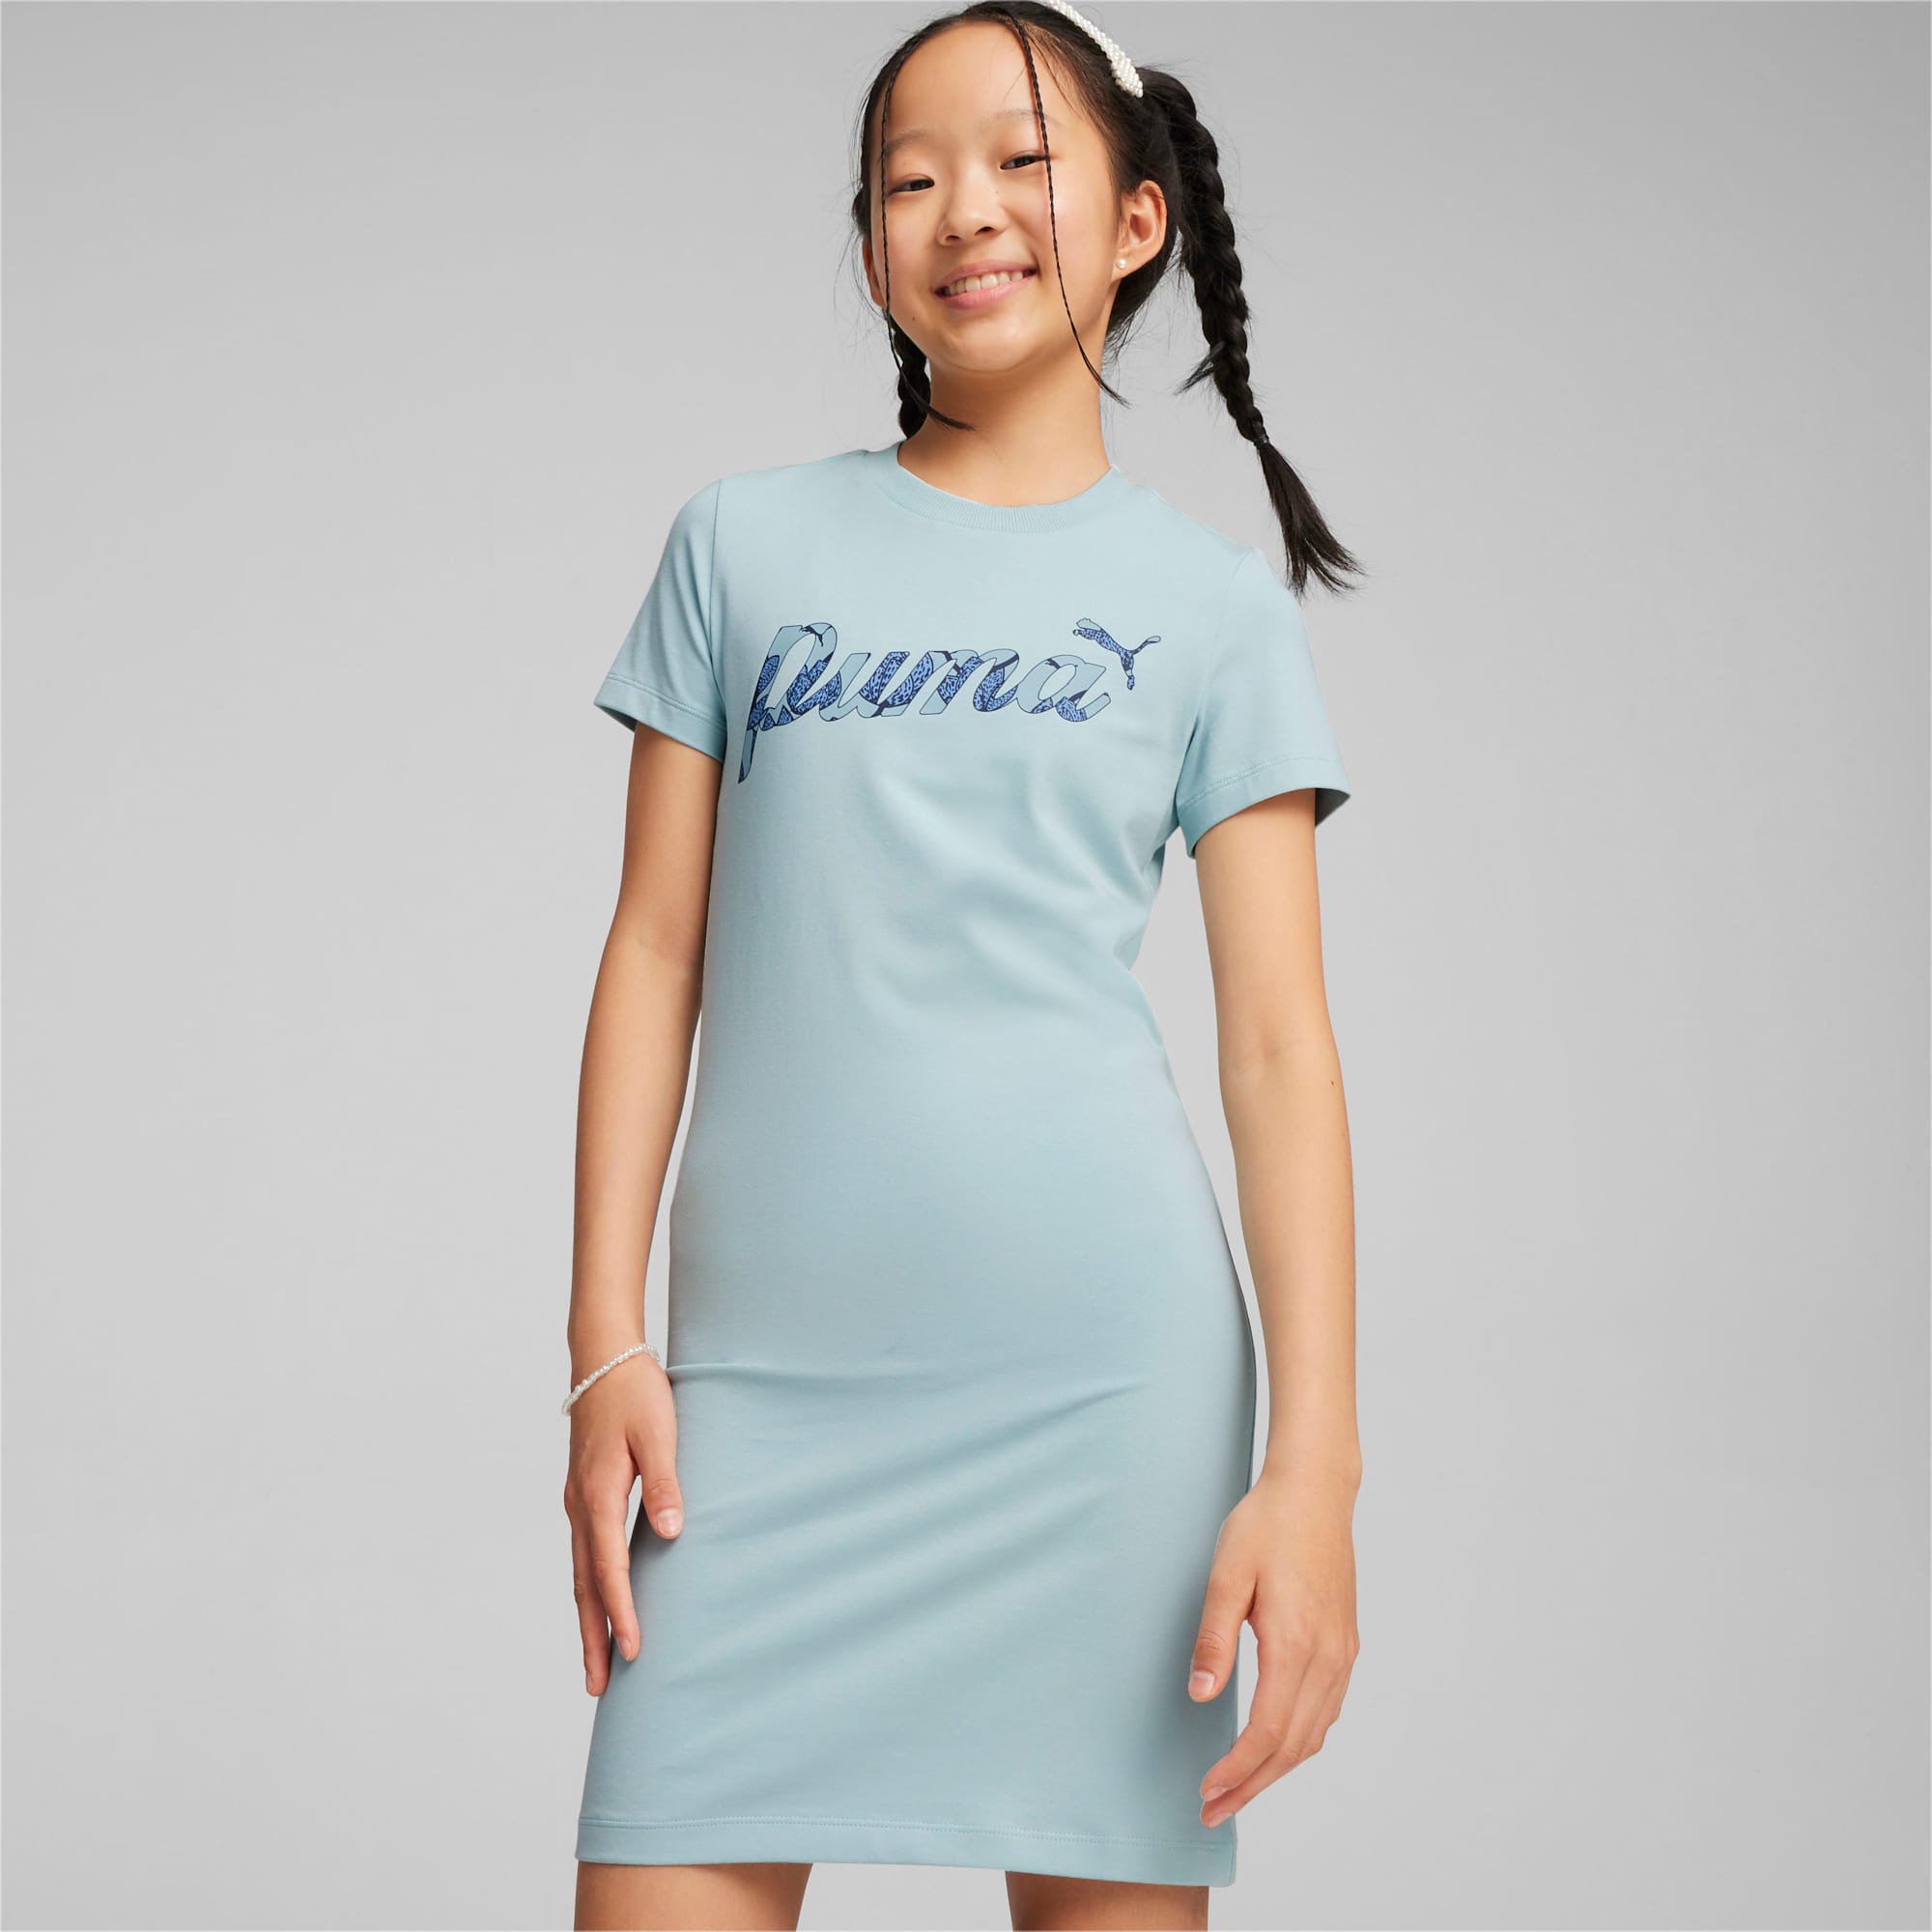 PUMA Ess+ Blossom Girls' Dress, Turquoise Surf, Size 128, Clothing